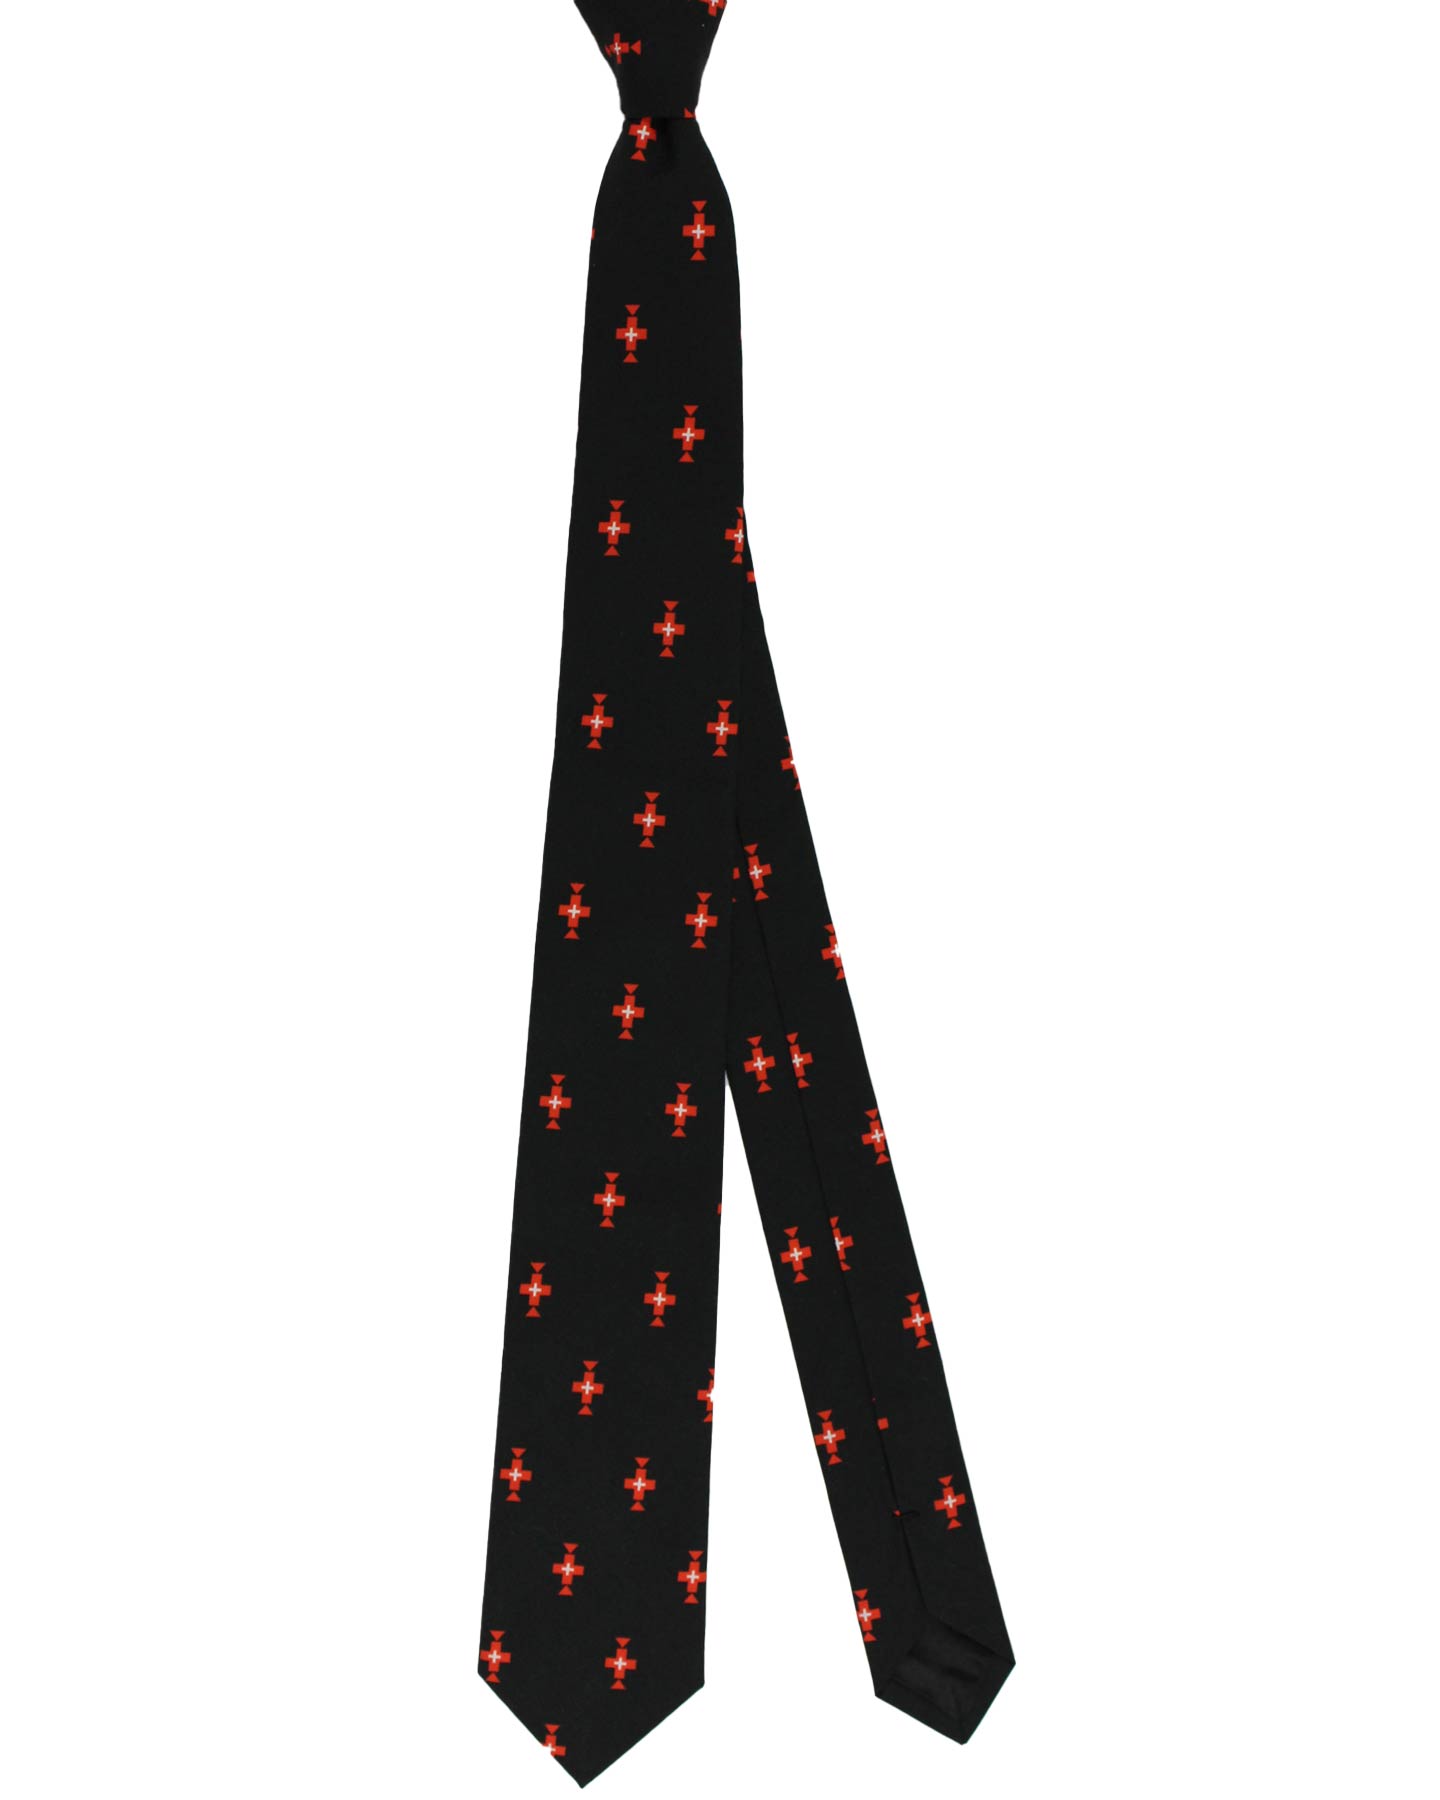 Givenchy Tie Black Red Cross Design - Narrow Necktie